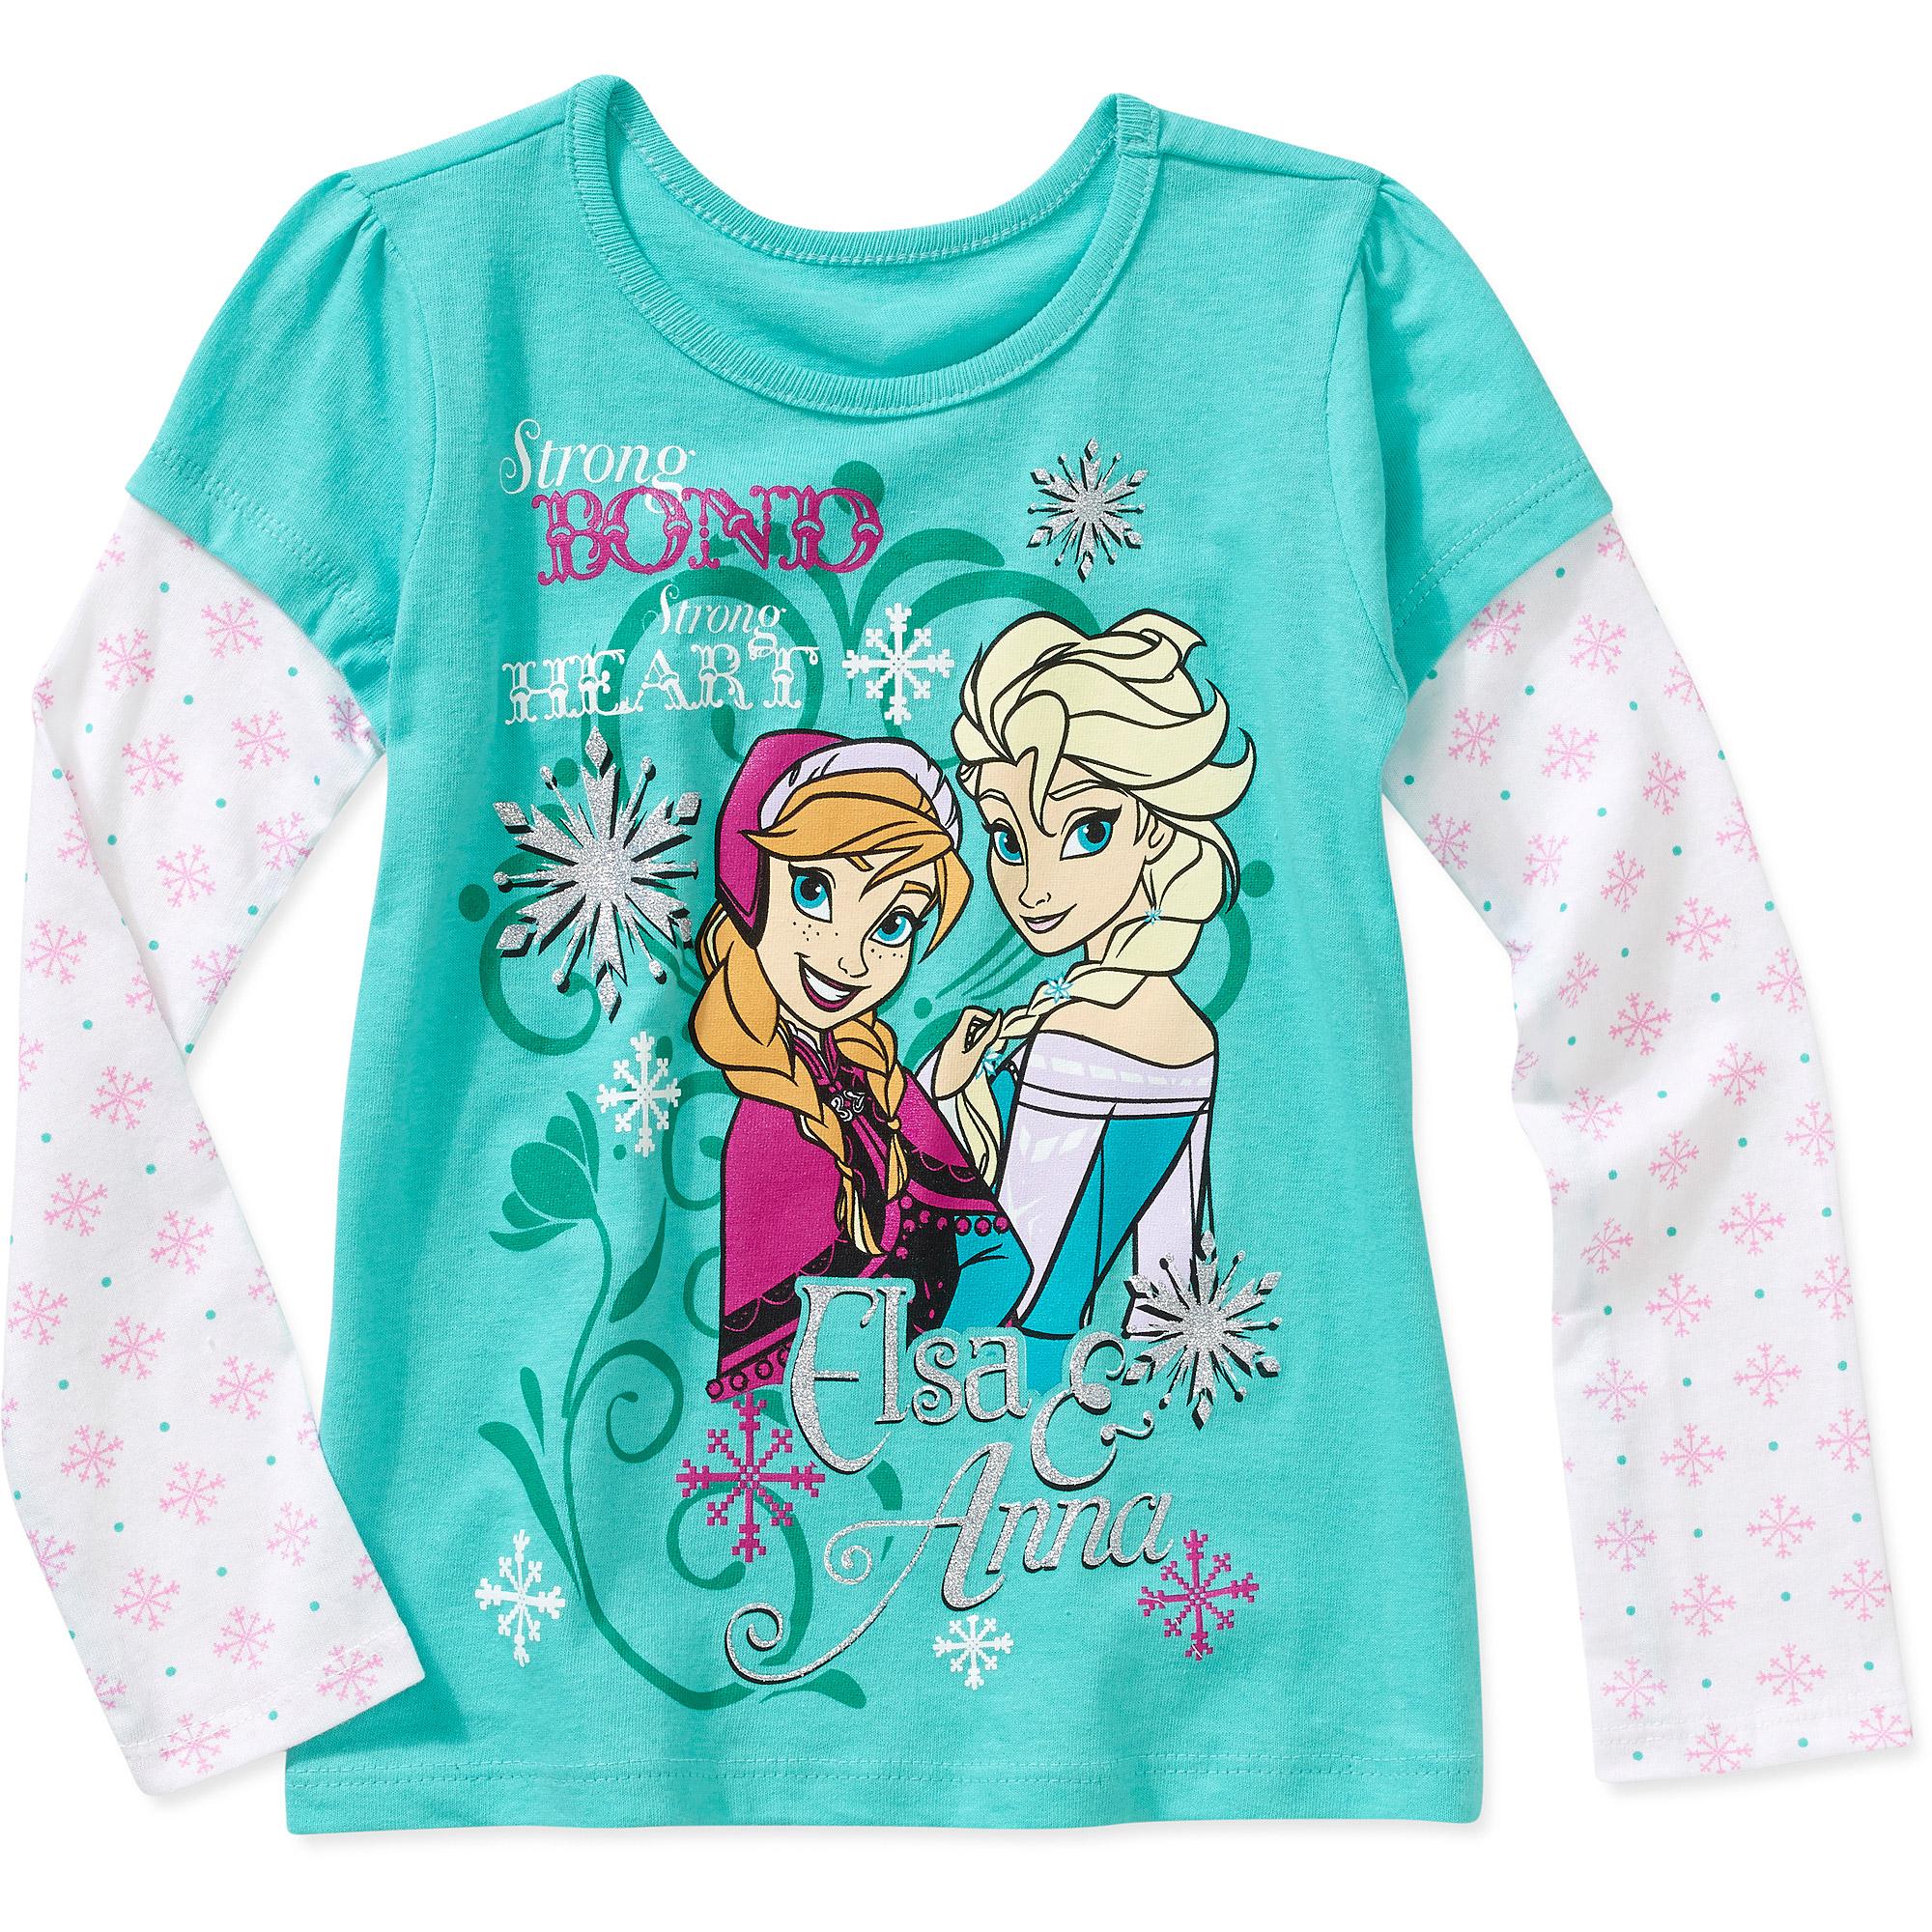 Disney Frozen Anna and Elsa Bond Toddler Girl Hangdown Graphic Tee Shirt - image 1 of 1